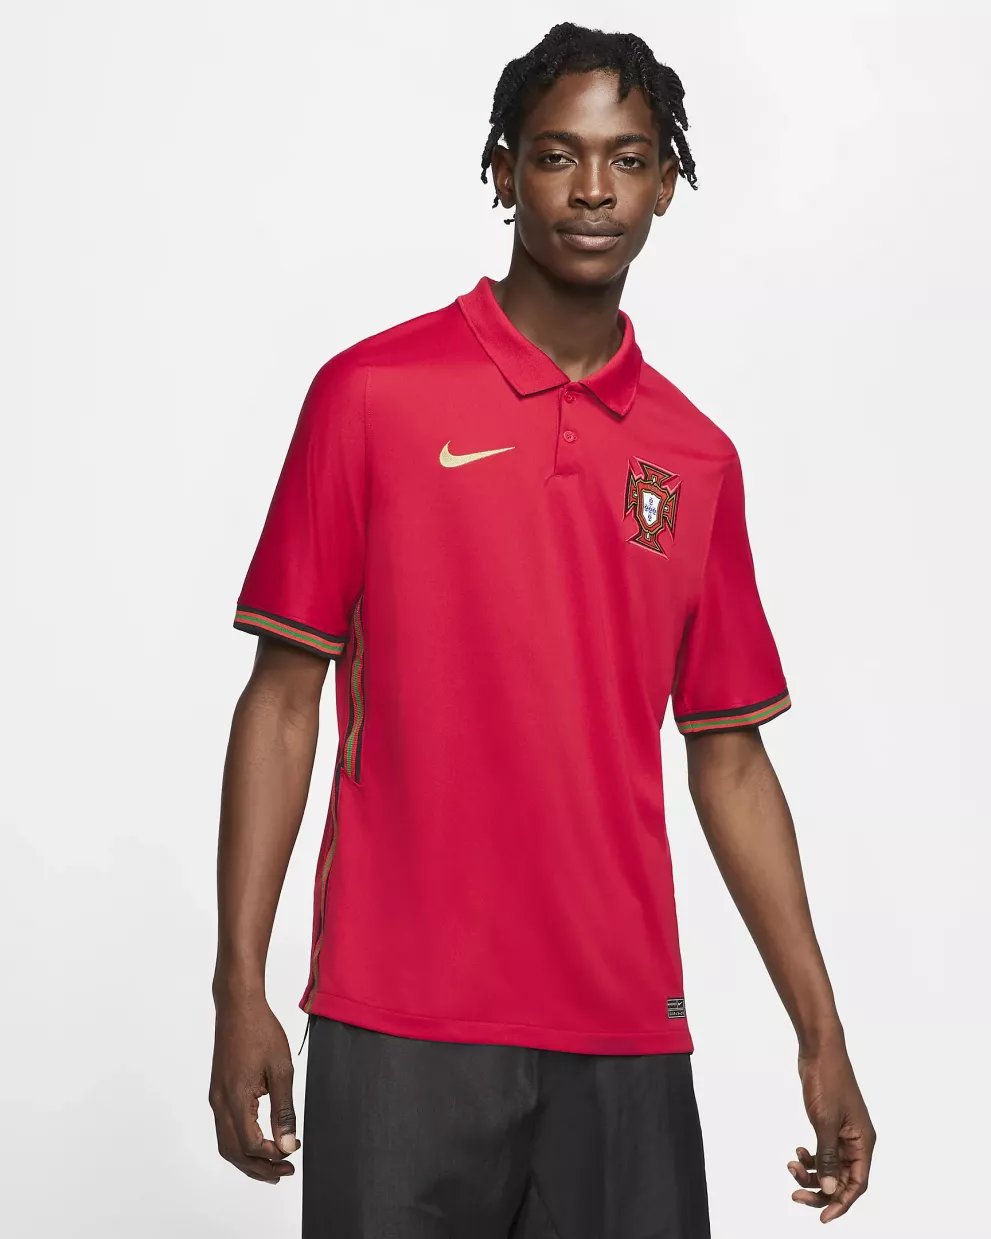 Portugal kit Nike jersey sale